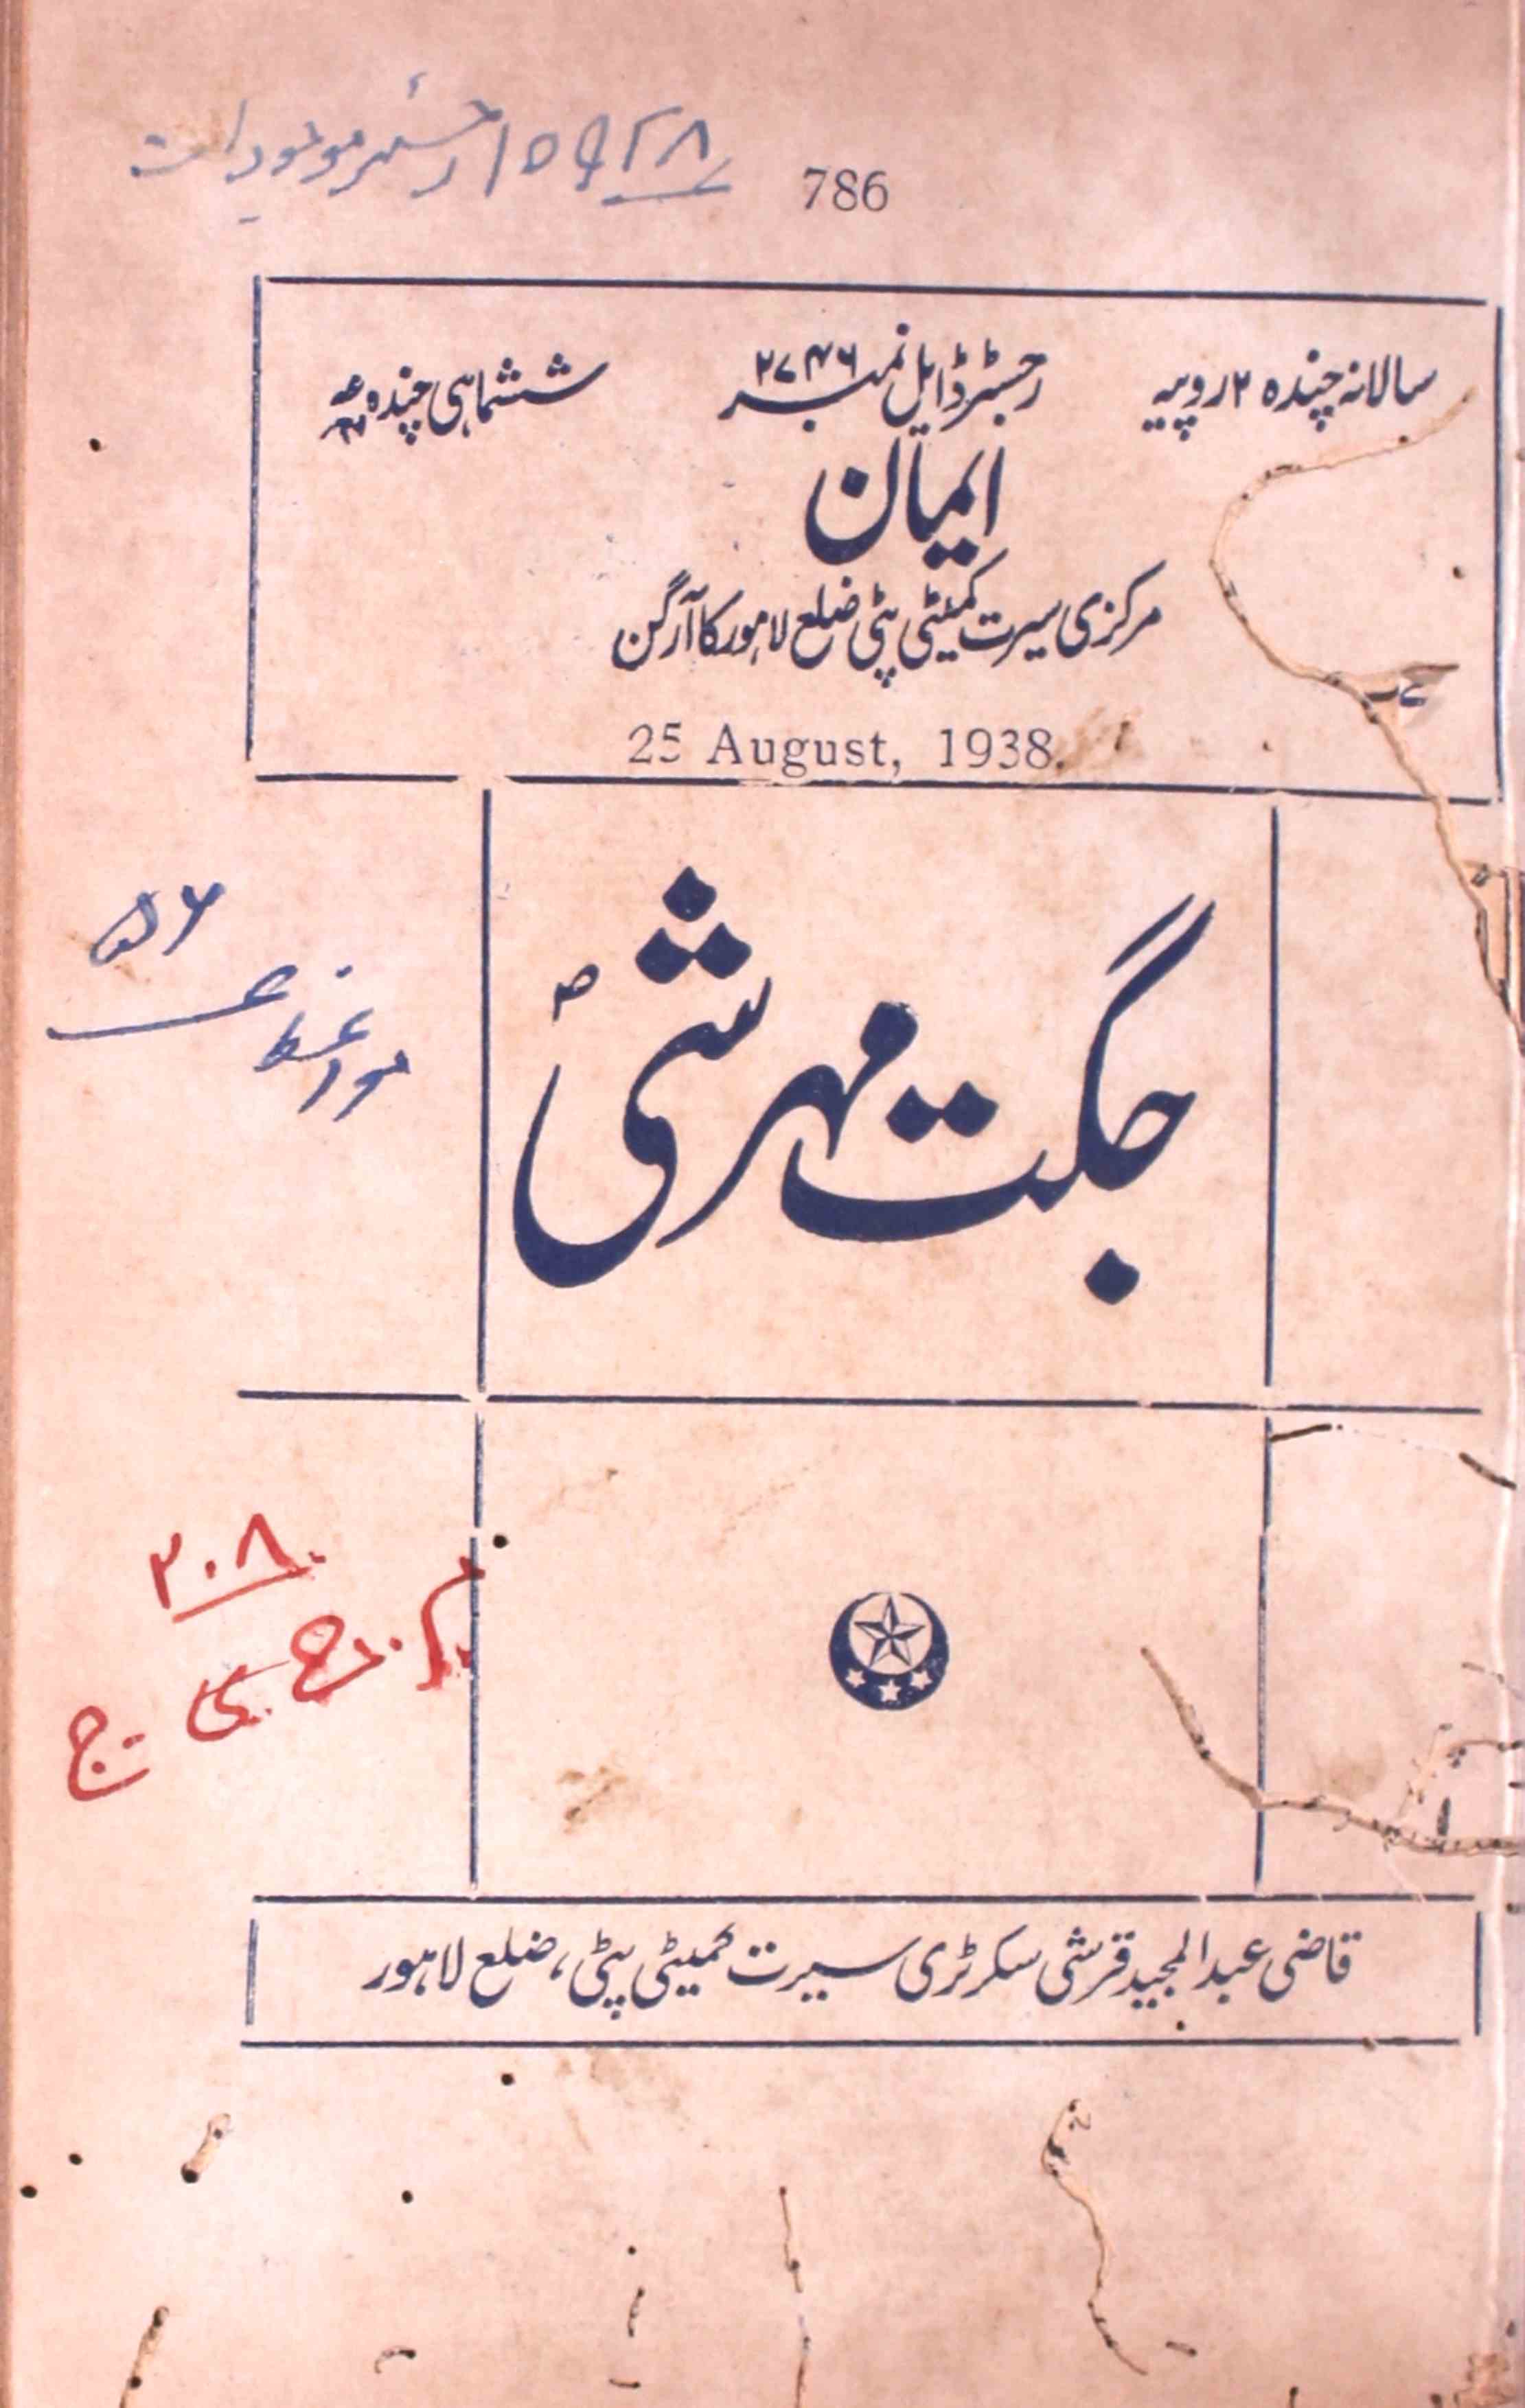 Imaan 25 Aug 1938 Jagat Maharshi